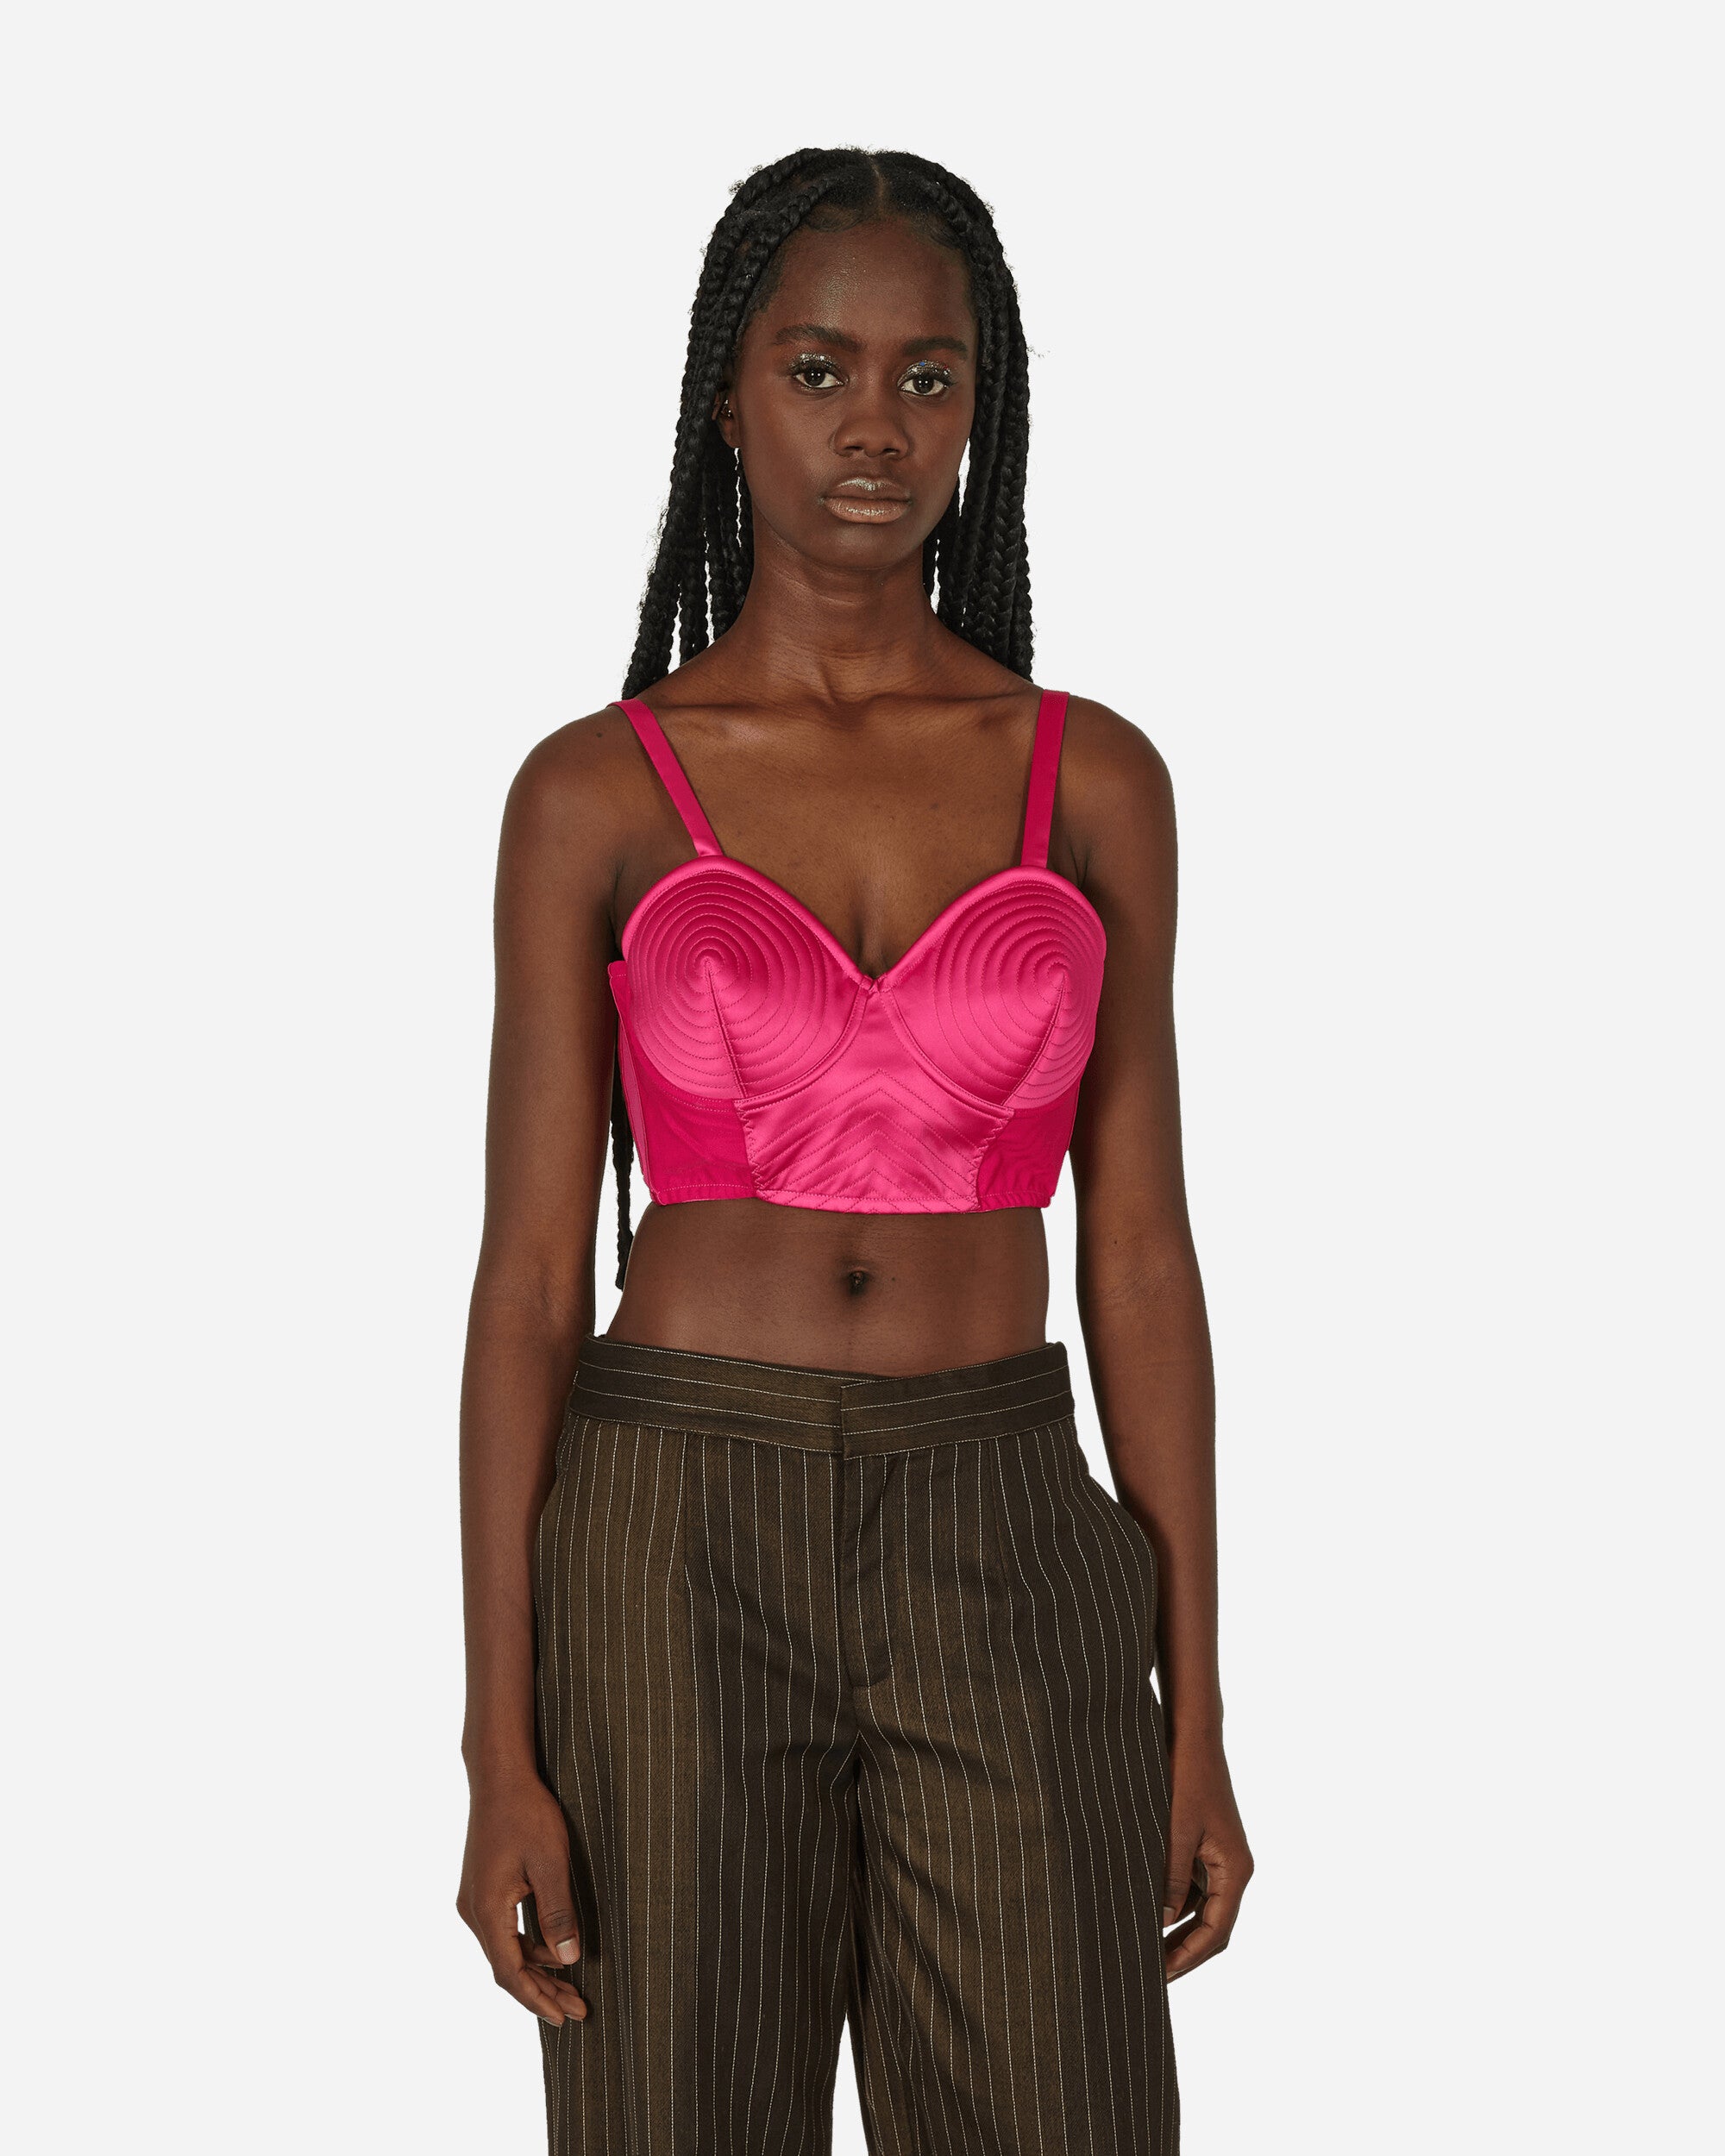 Iconic bra top in pink - Jean Paul Gaultier